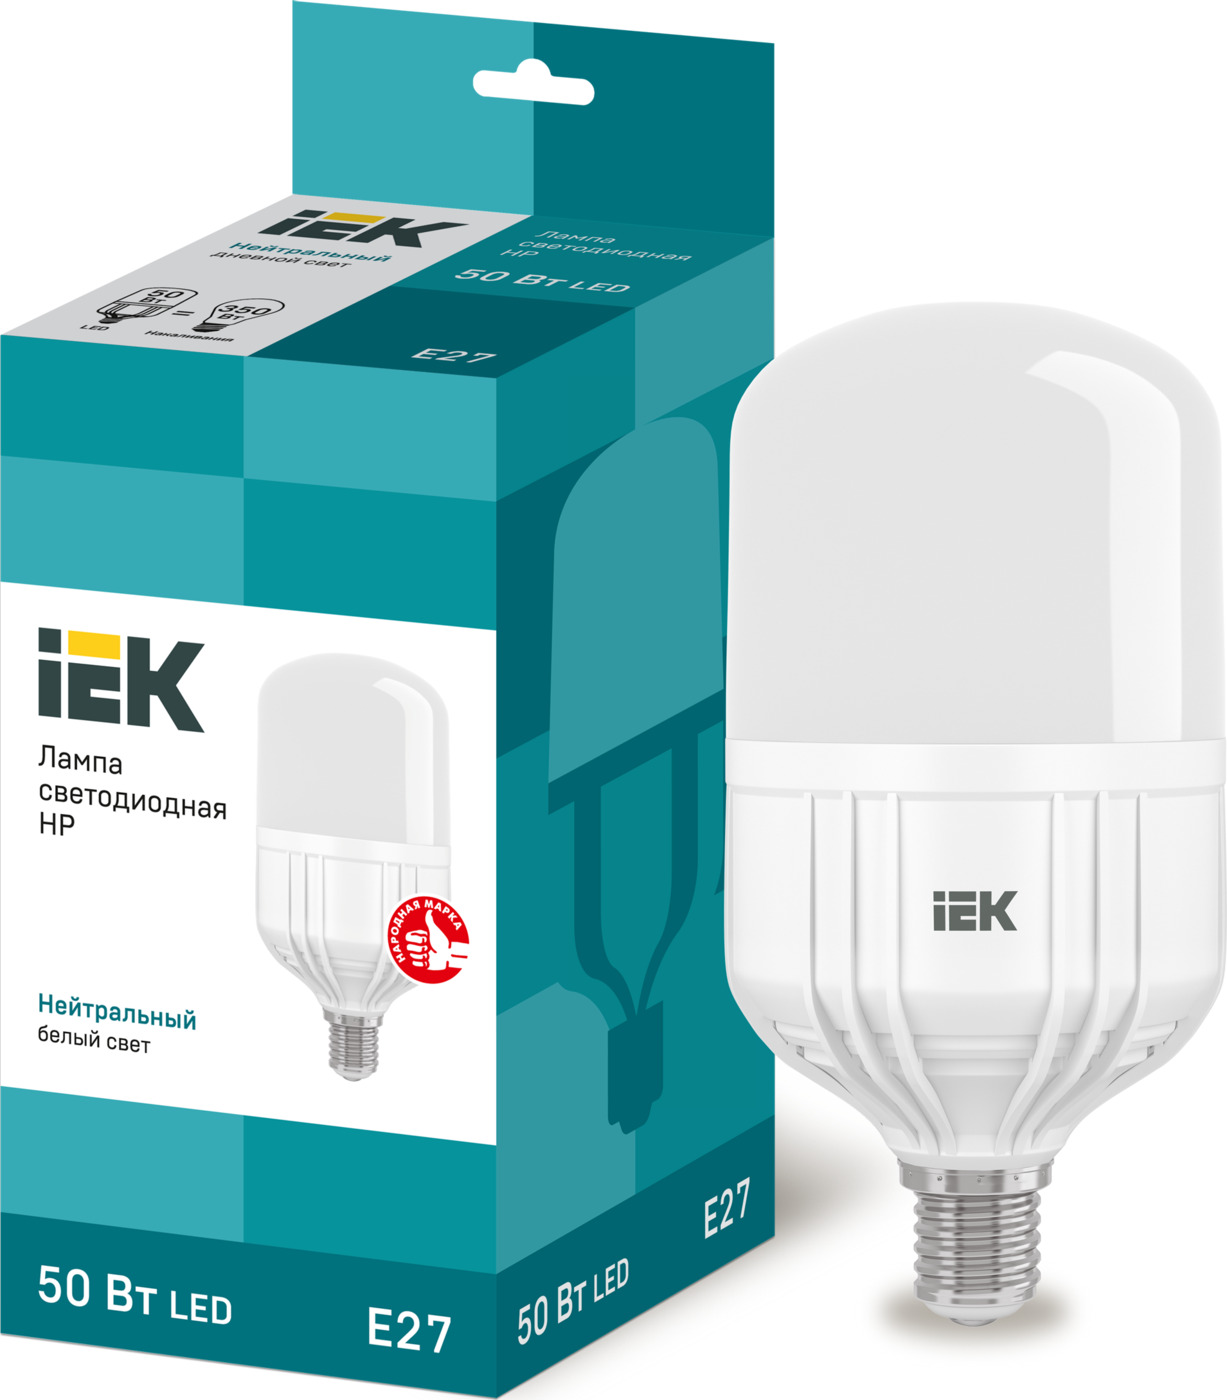 Лампочка Iek LLE-HP-50-230-40-E27 50 Вт, Светодиодная